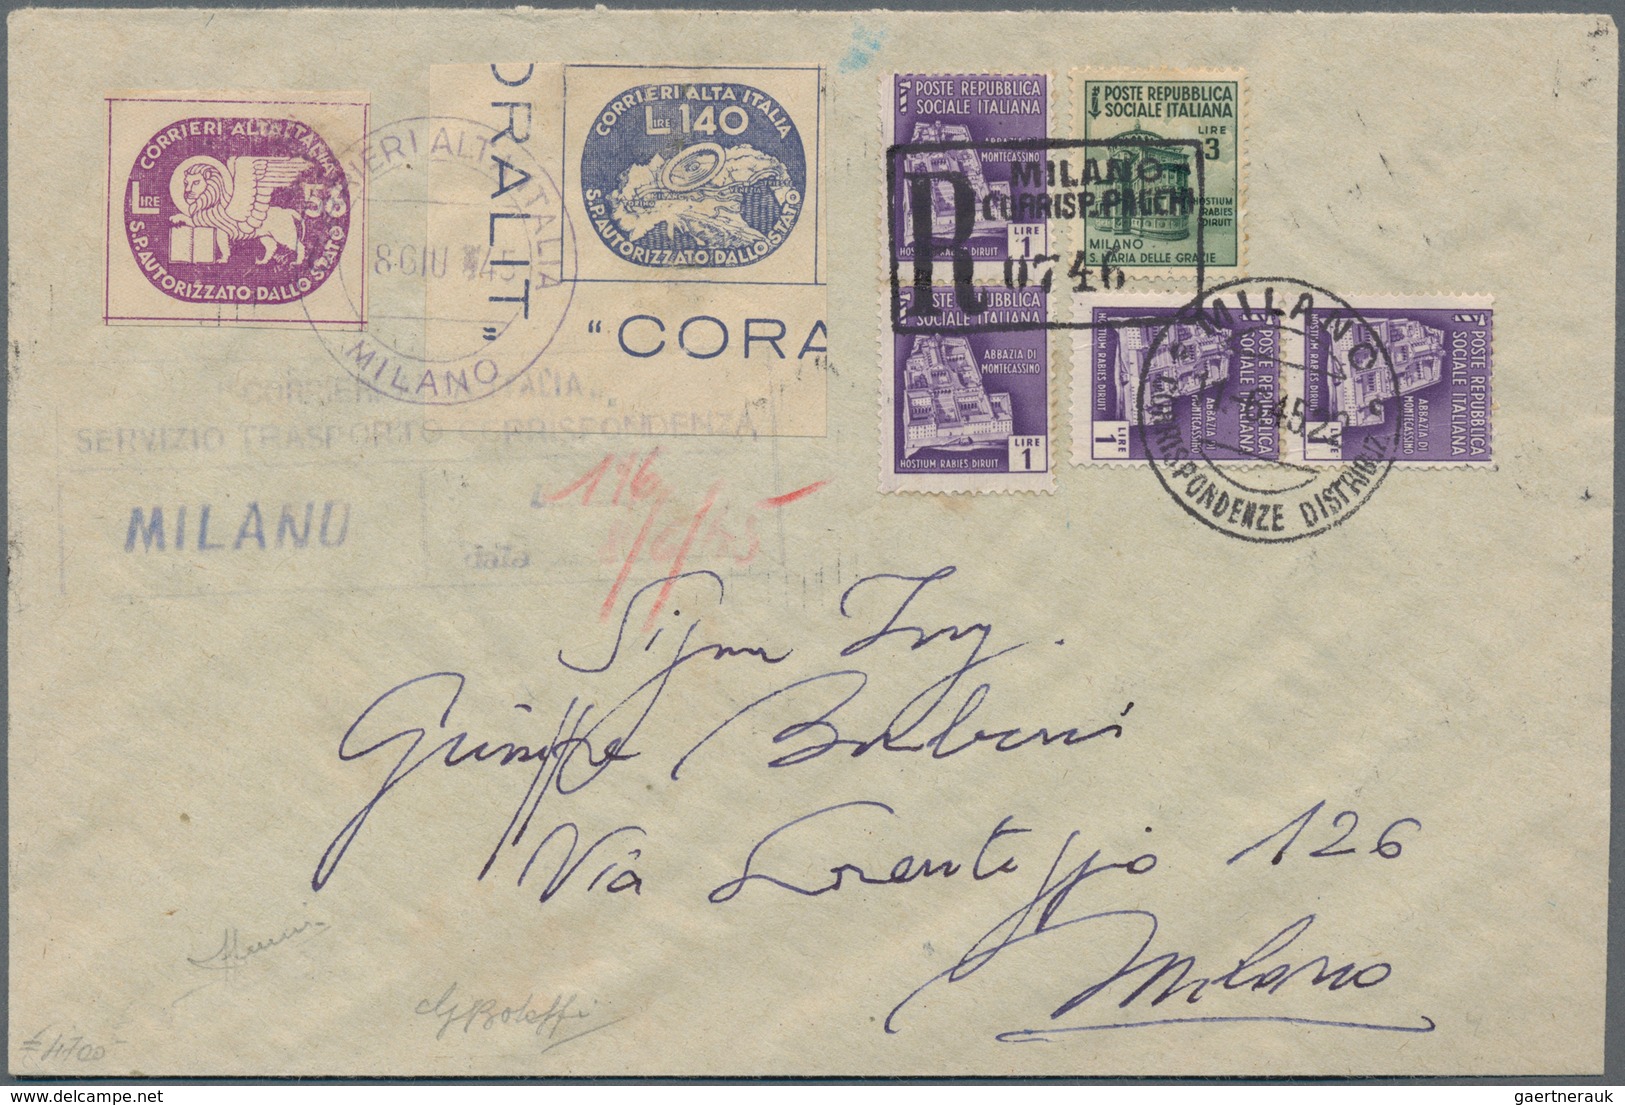 Italien - Lokalausgaben 1944/45 - Coralit (Privatpost): 1945. Registered Letter, Franked With CORALI - Geautoriseerde Privédienst